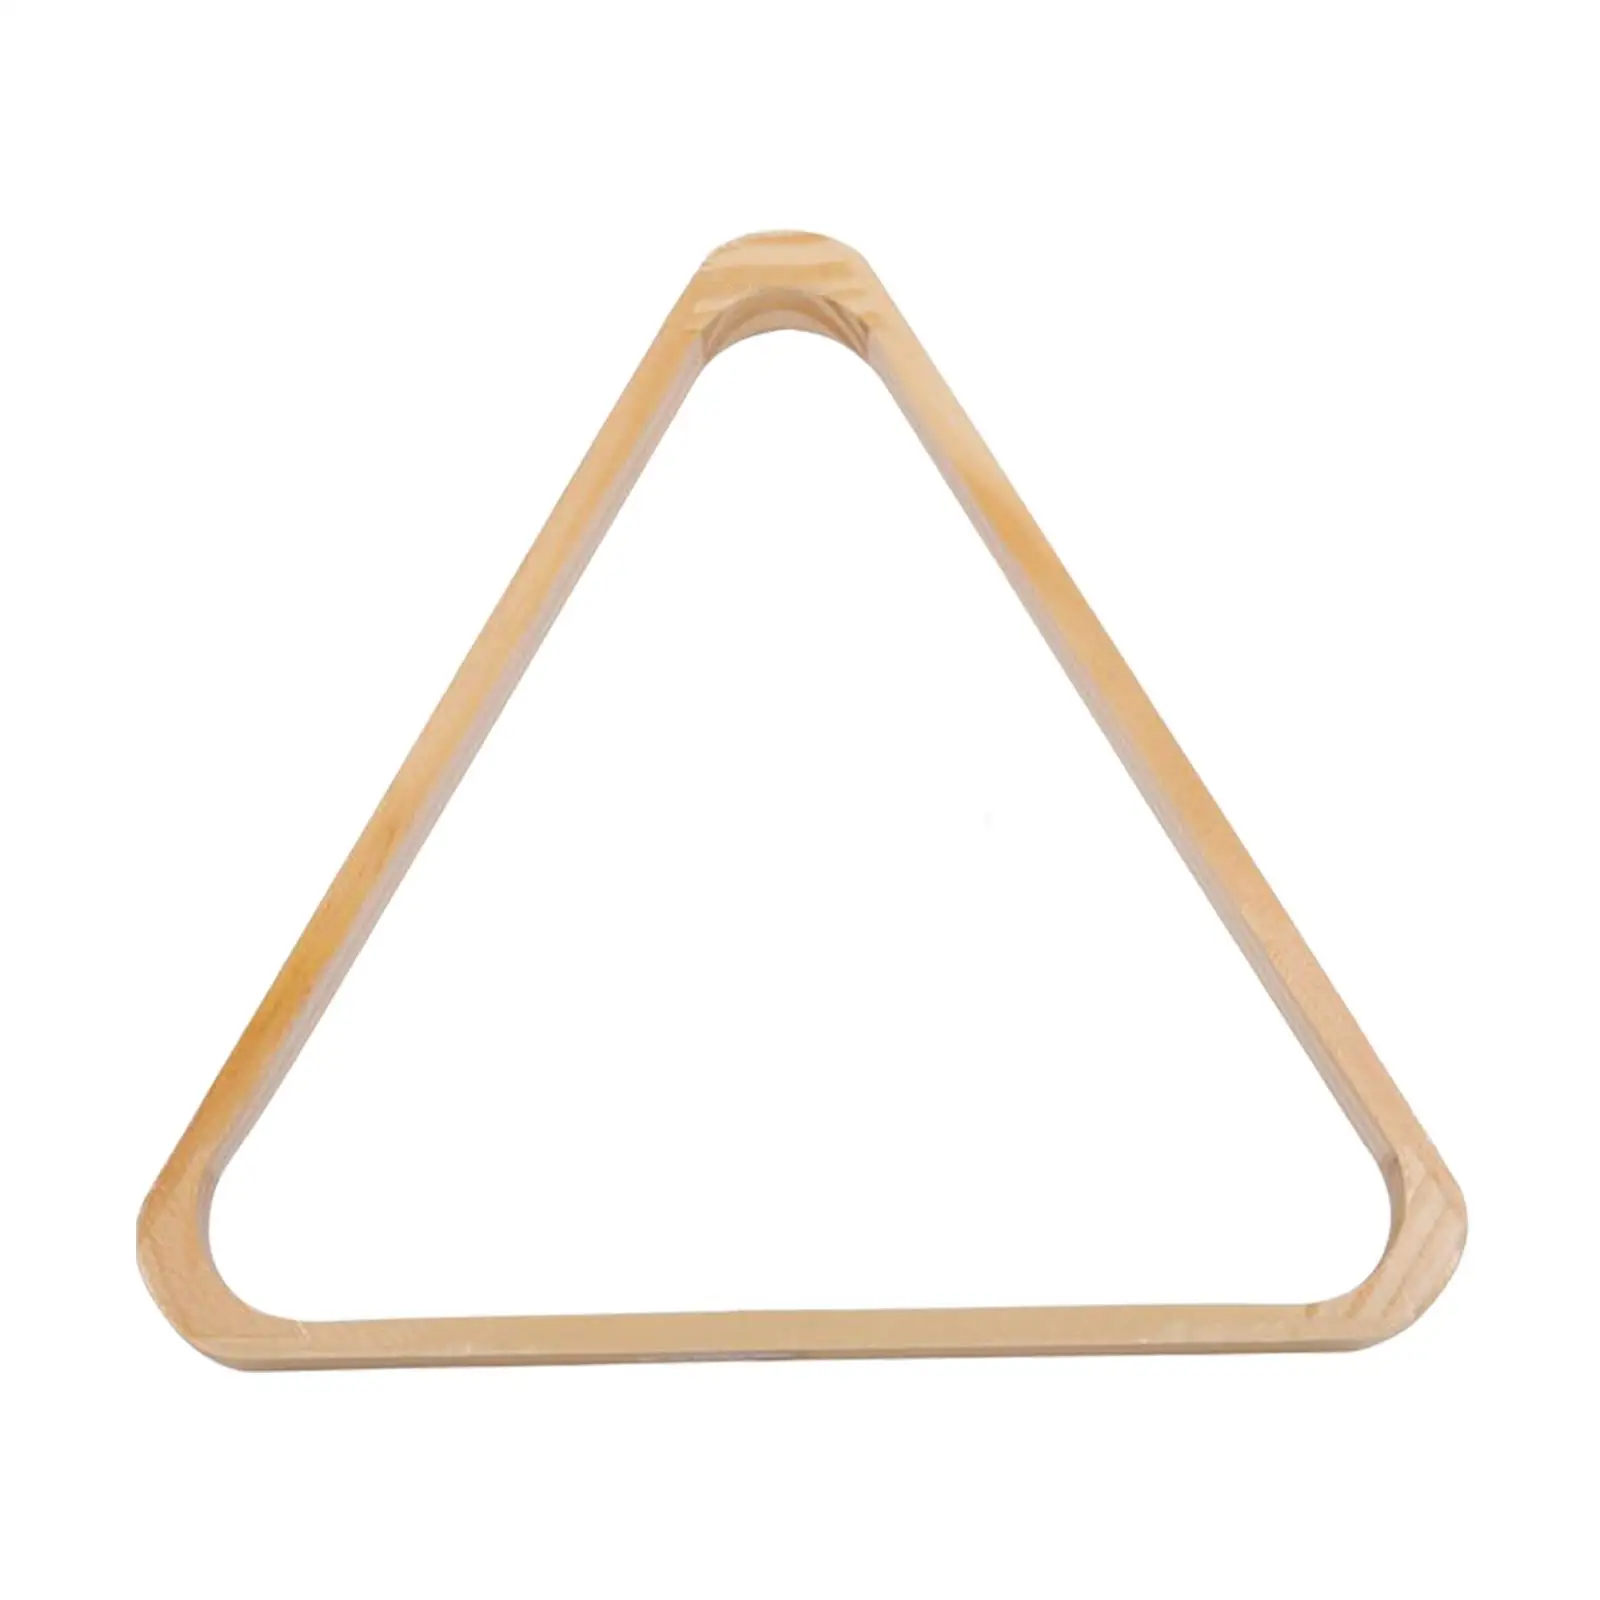 Billiard Triangle Rack Tripod Accessories Positioning Pool Table Accessory